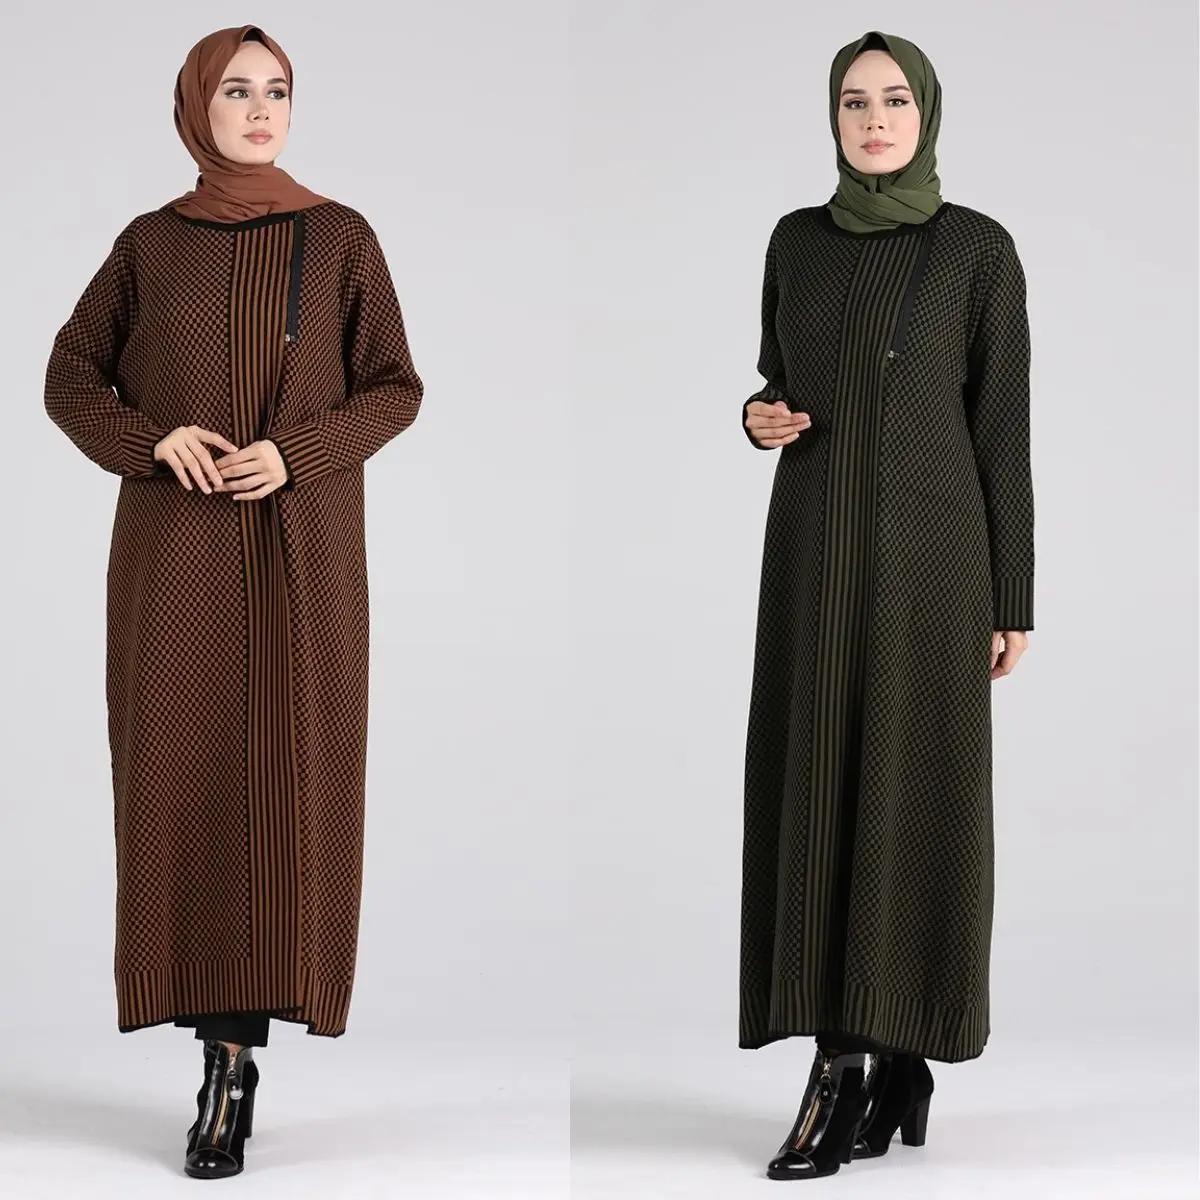 Knitwear Cap Zipper Long Sleeve Belted Pocket Jacket Collar Winter Women Muslim Fashion Hijab  Turkey  Istanbul  Islamic  Dubai